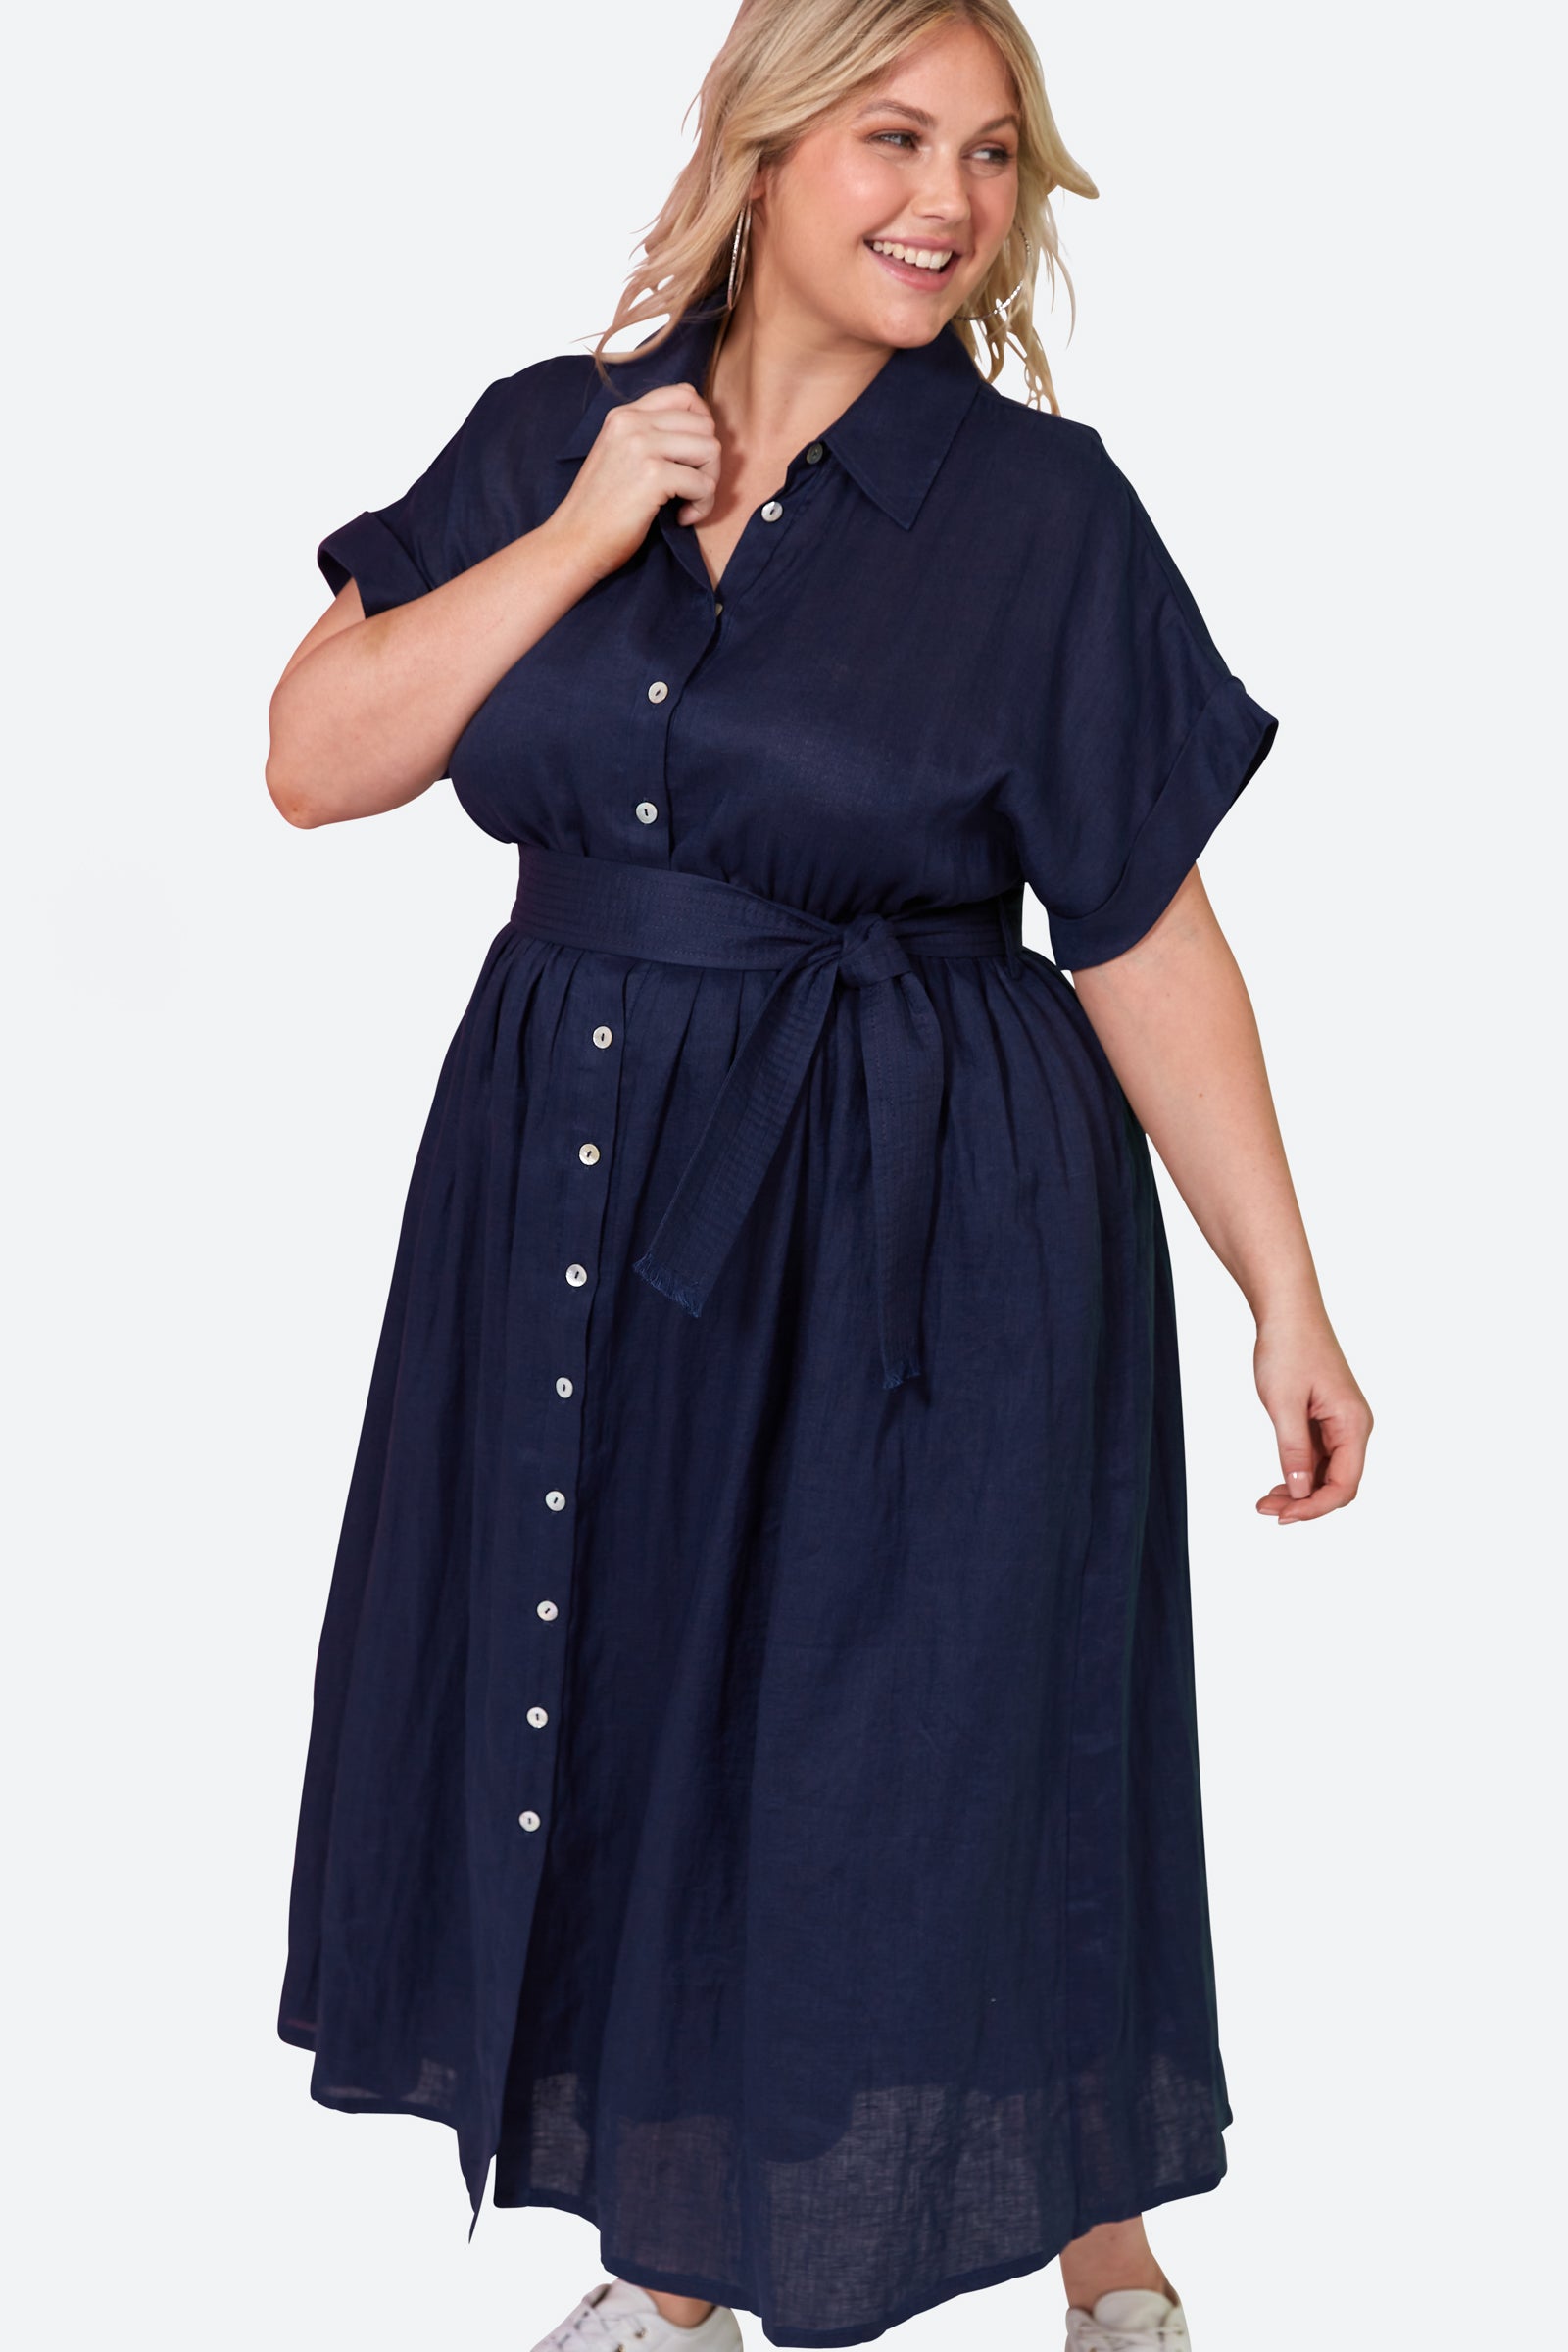 La Vie Shirt Dress - Sapphire - eb&ive Clothing - Shirt Dress Maxi Linen